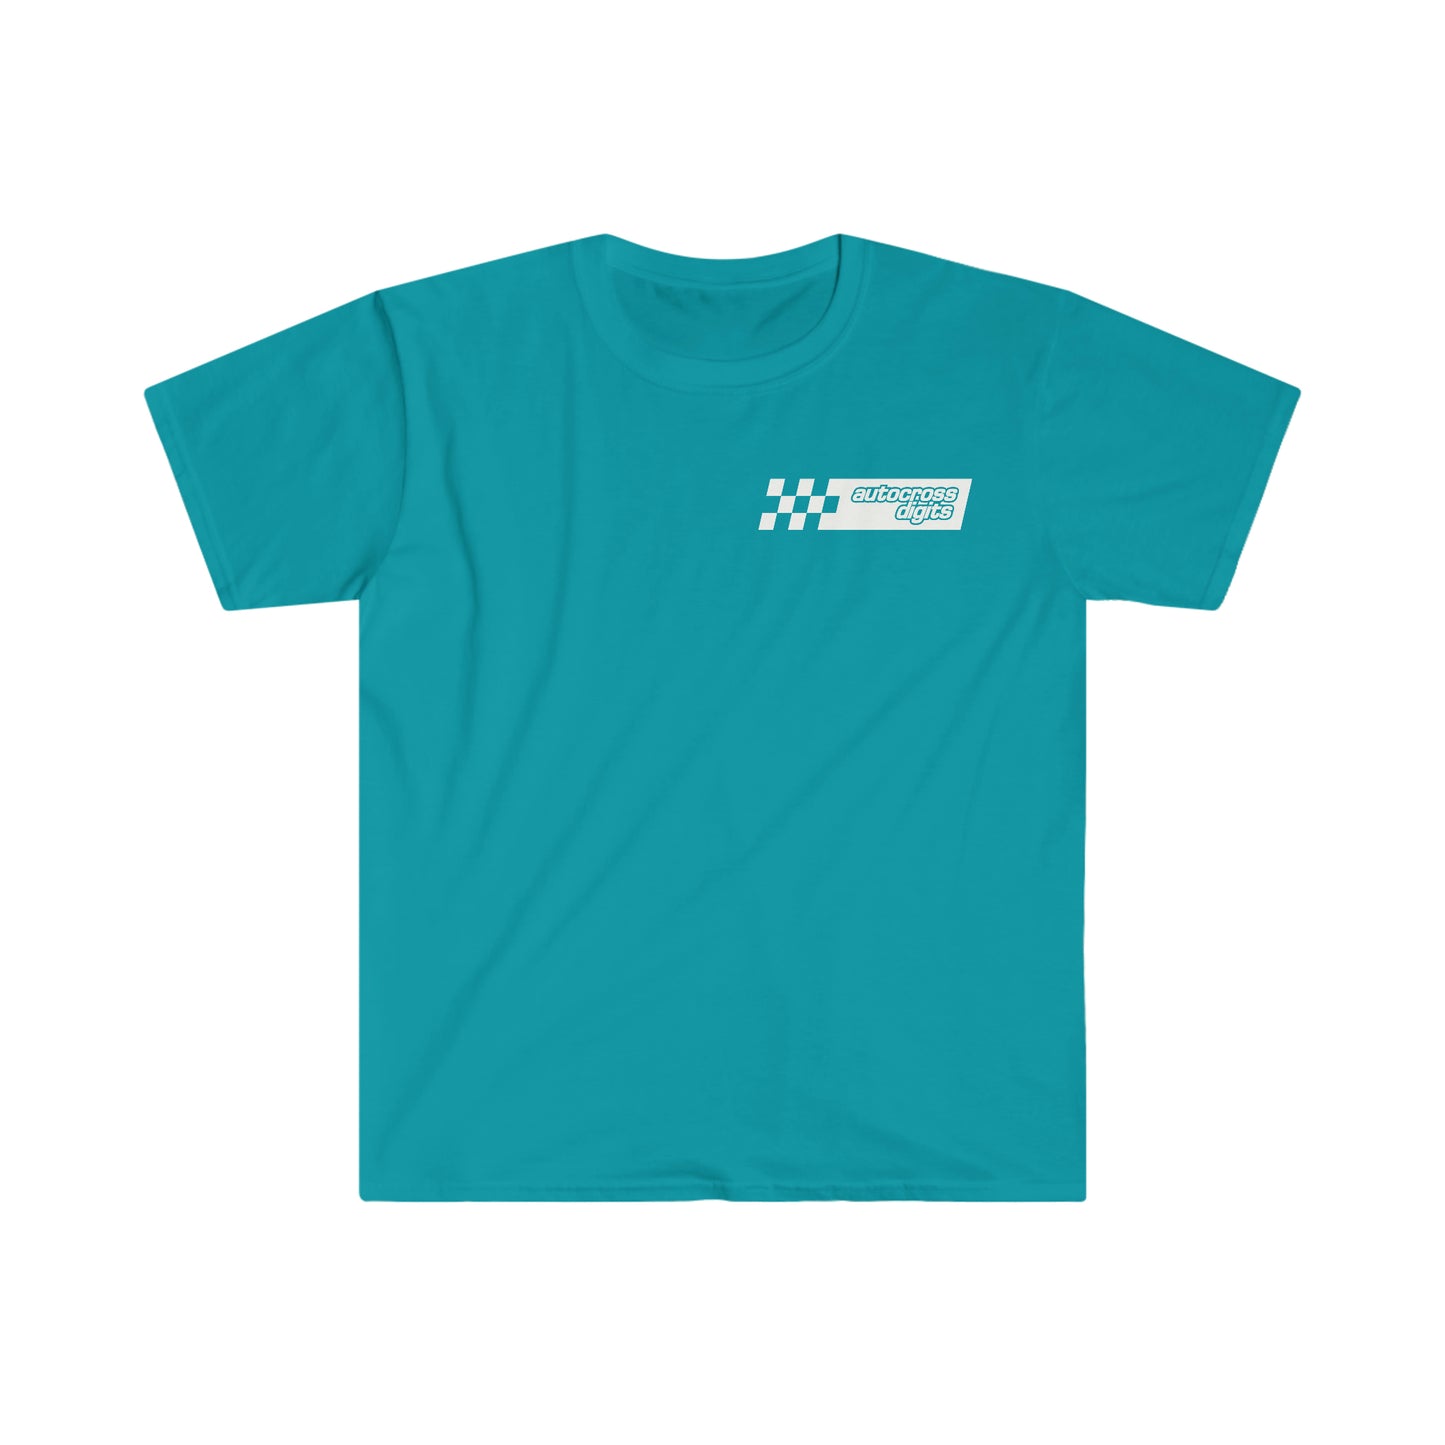 Cones Pavement Sunburn Unisex T-Shirt